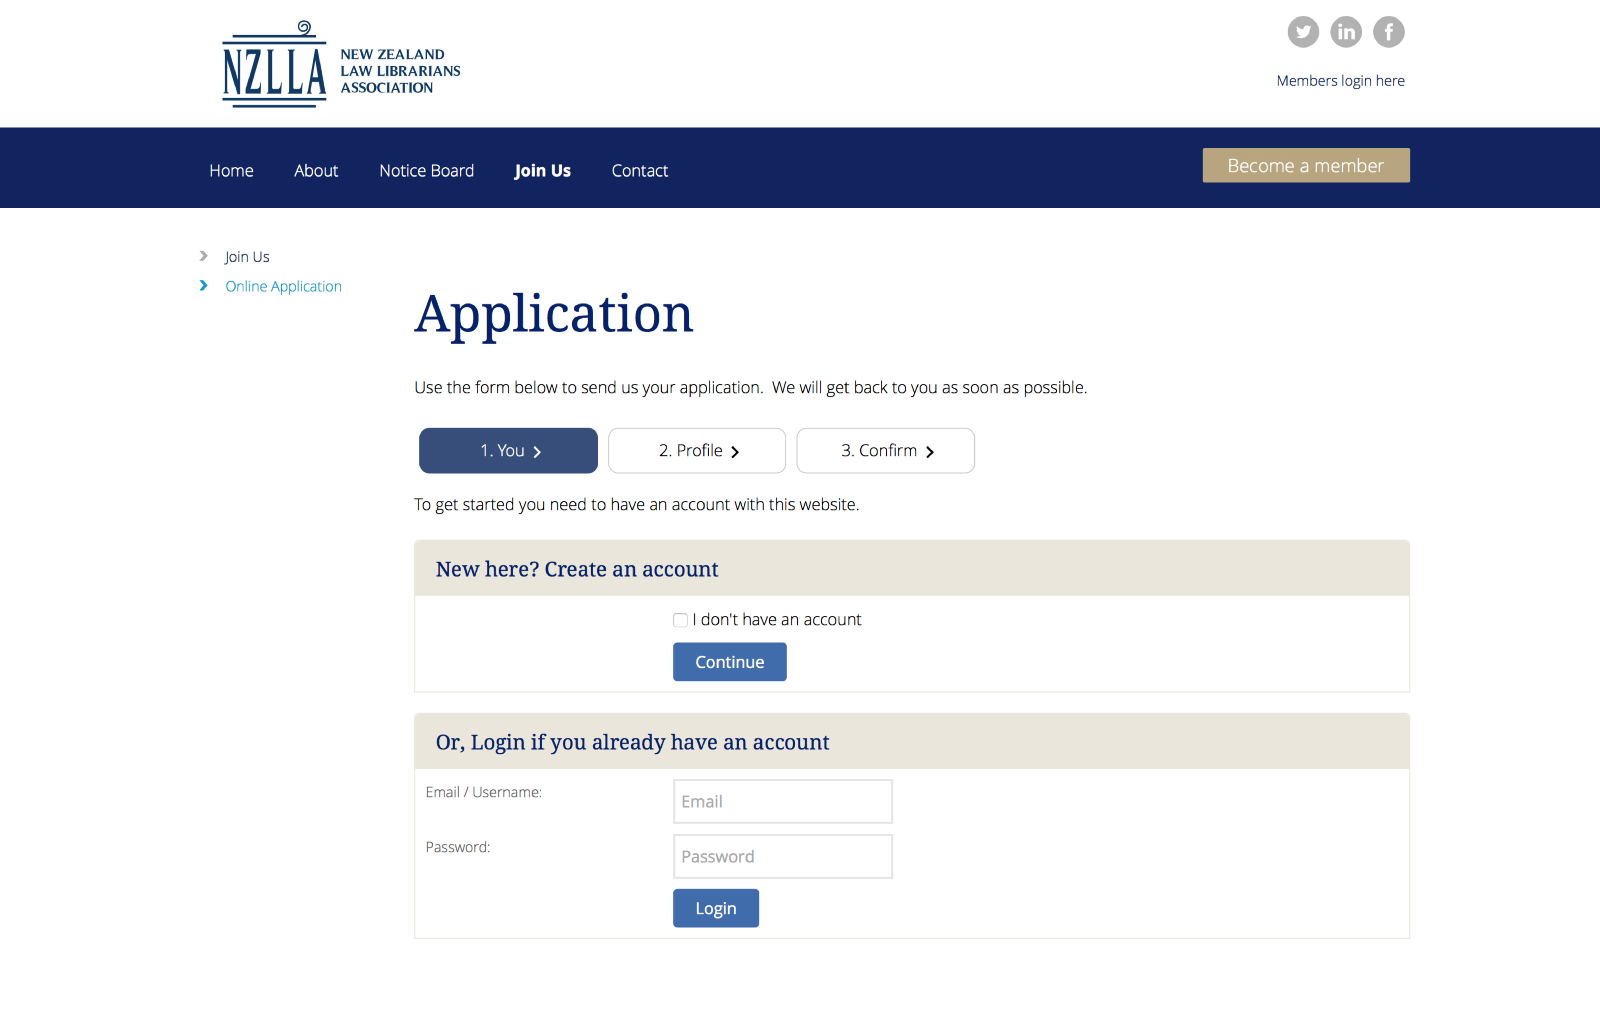 NZLLA Online Application